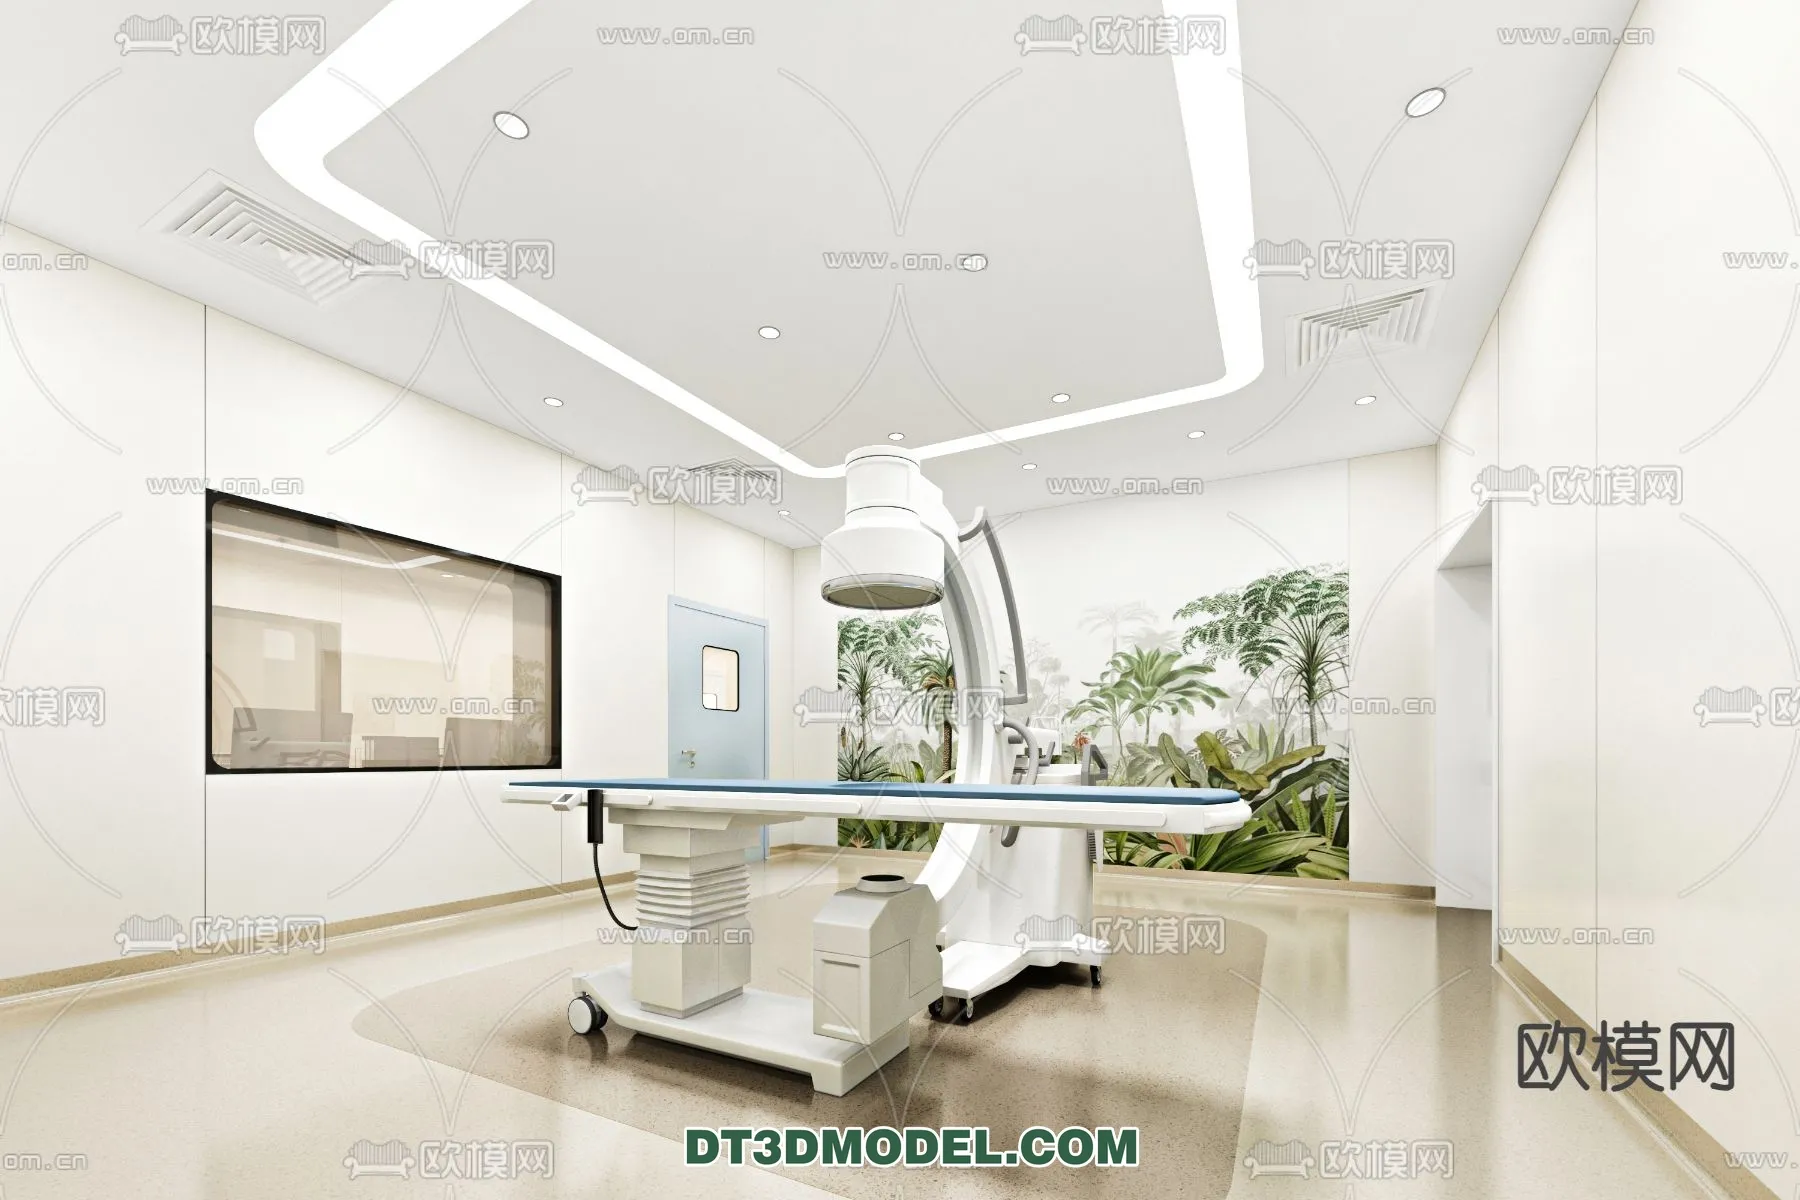 HOSPITAL 3D SCENES – MODERN – 0142